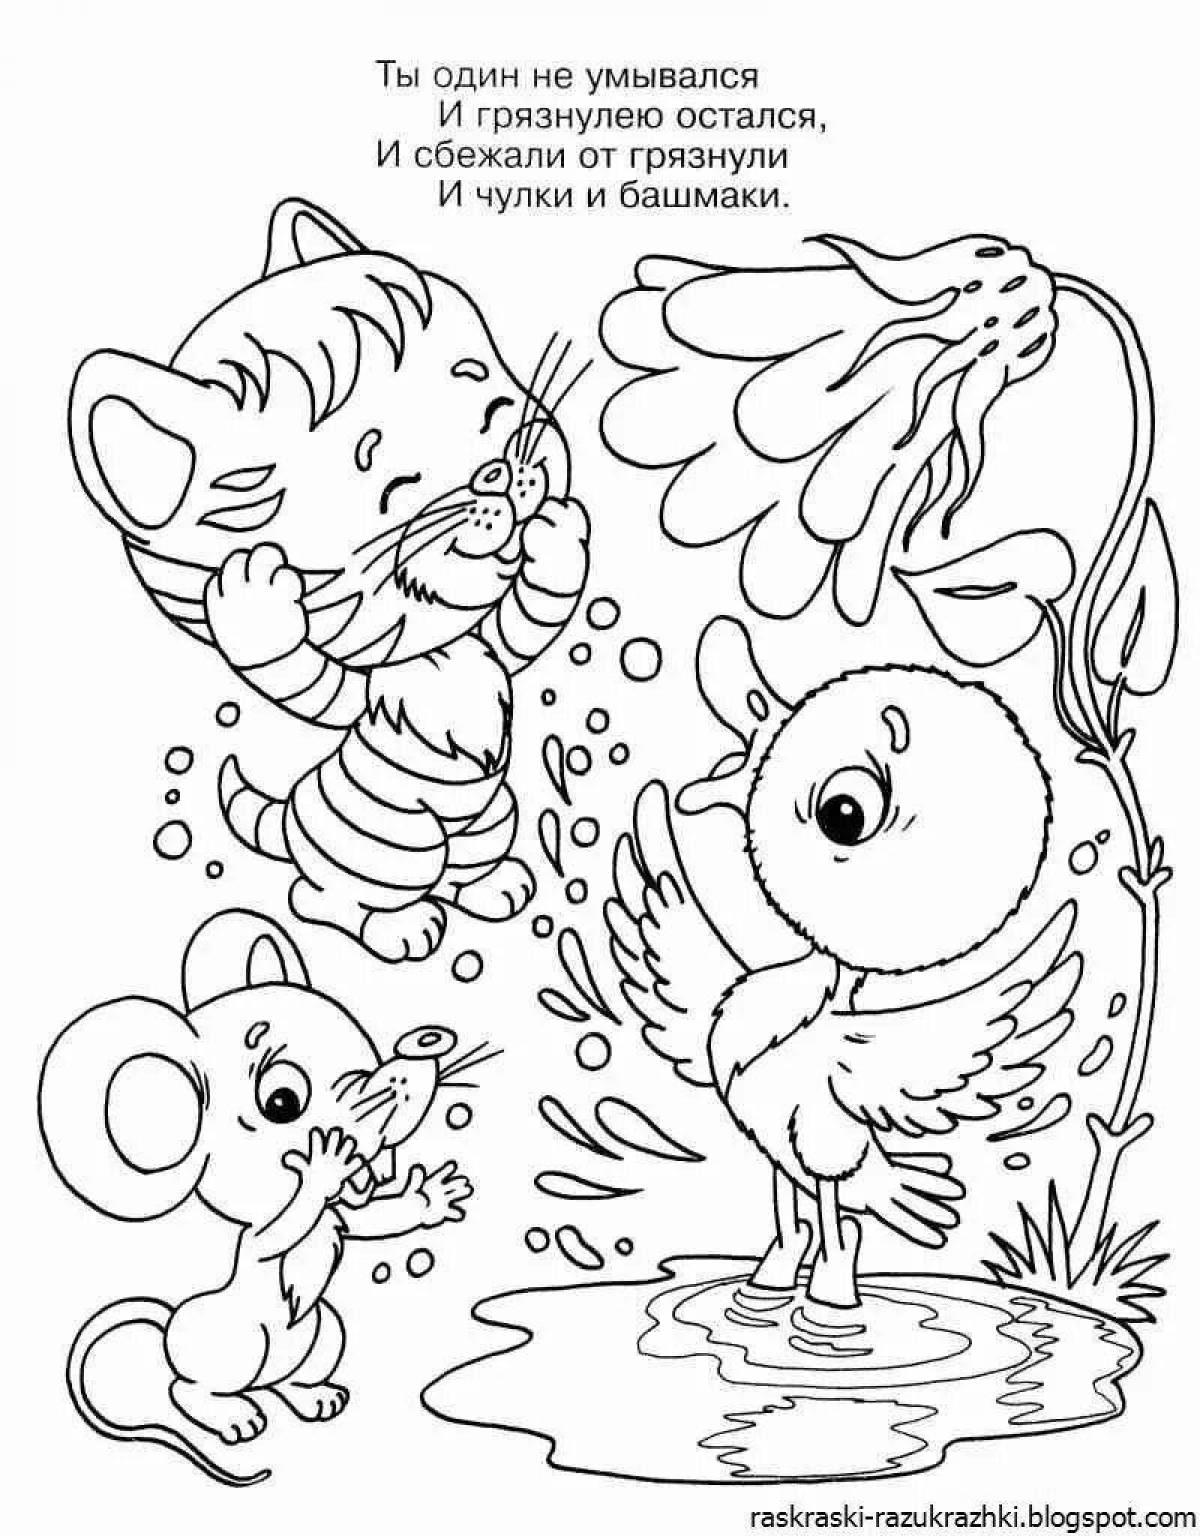 Coloring book joyful Chukov's fairy tale